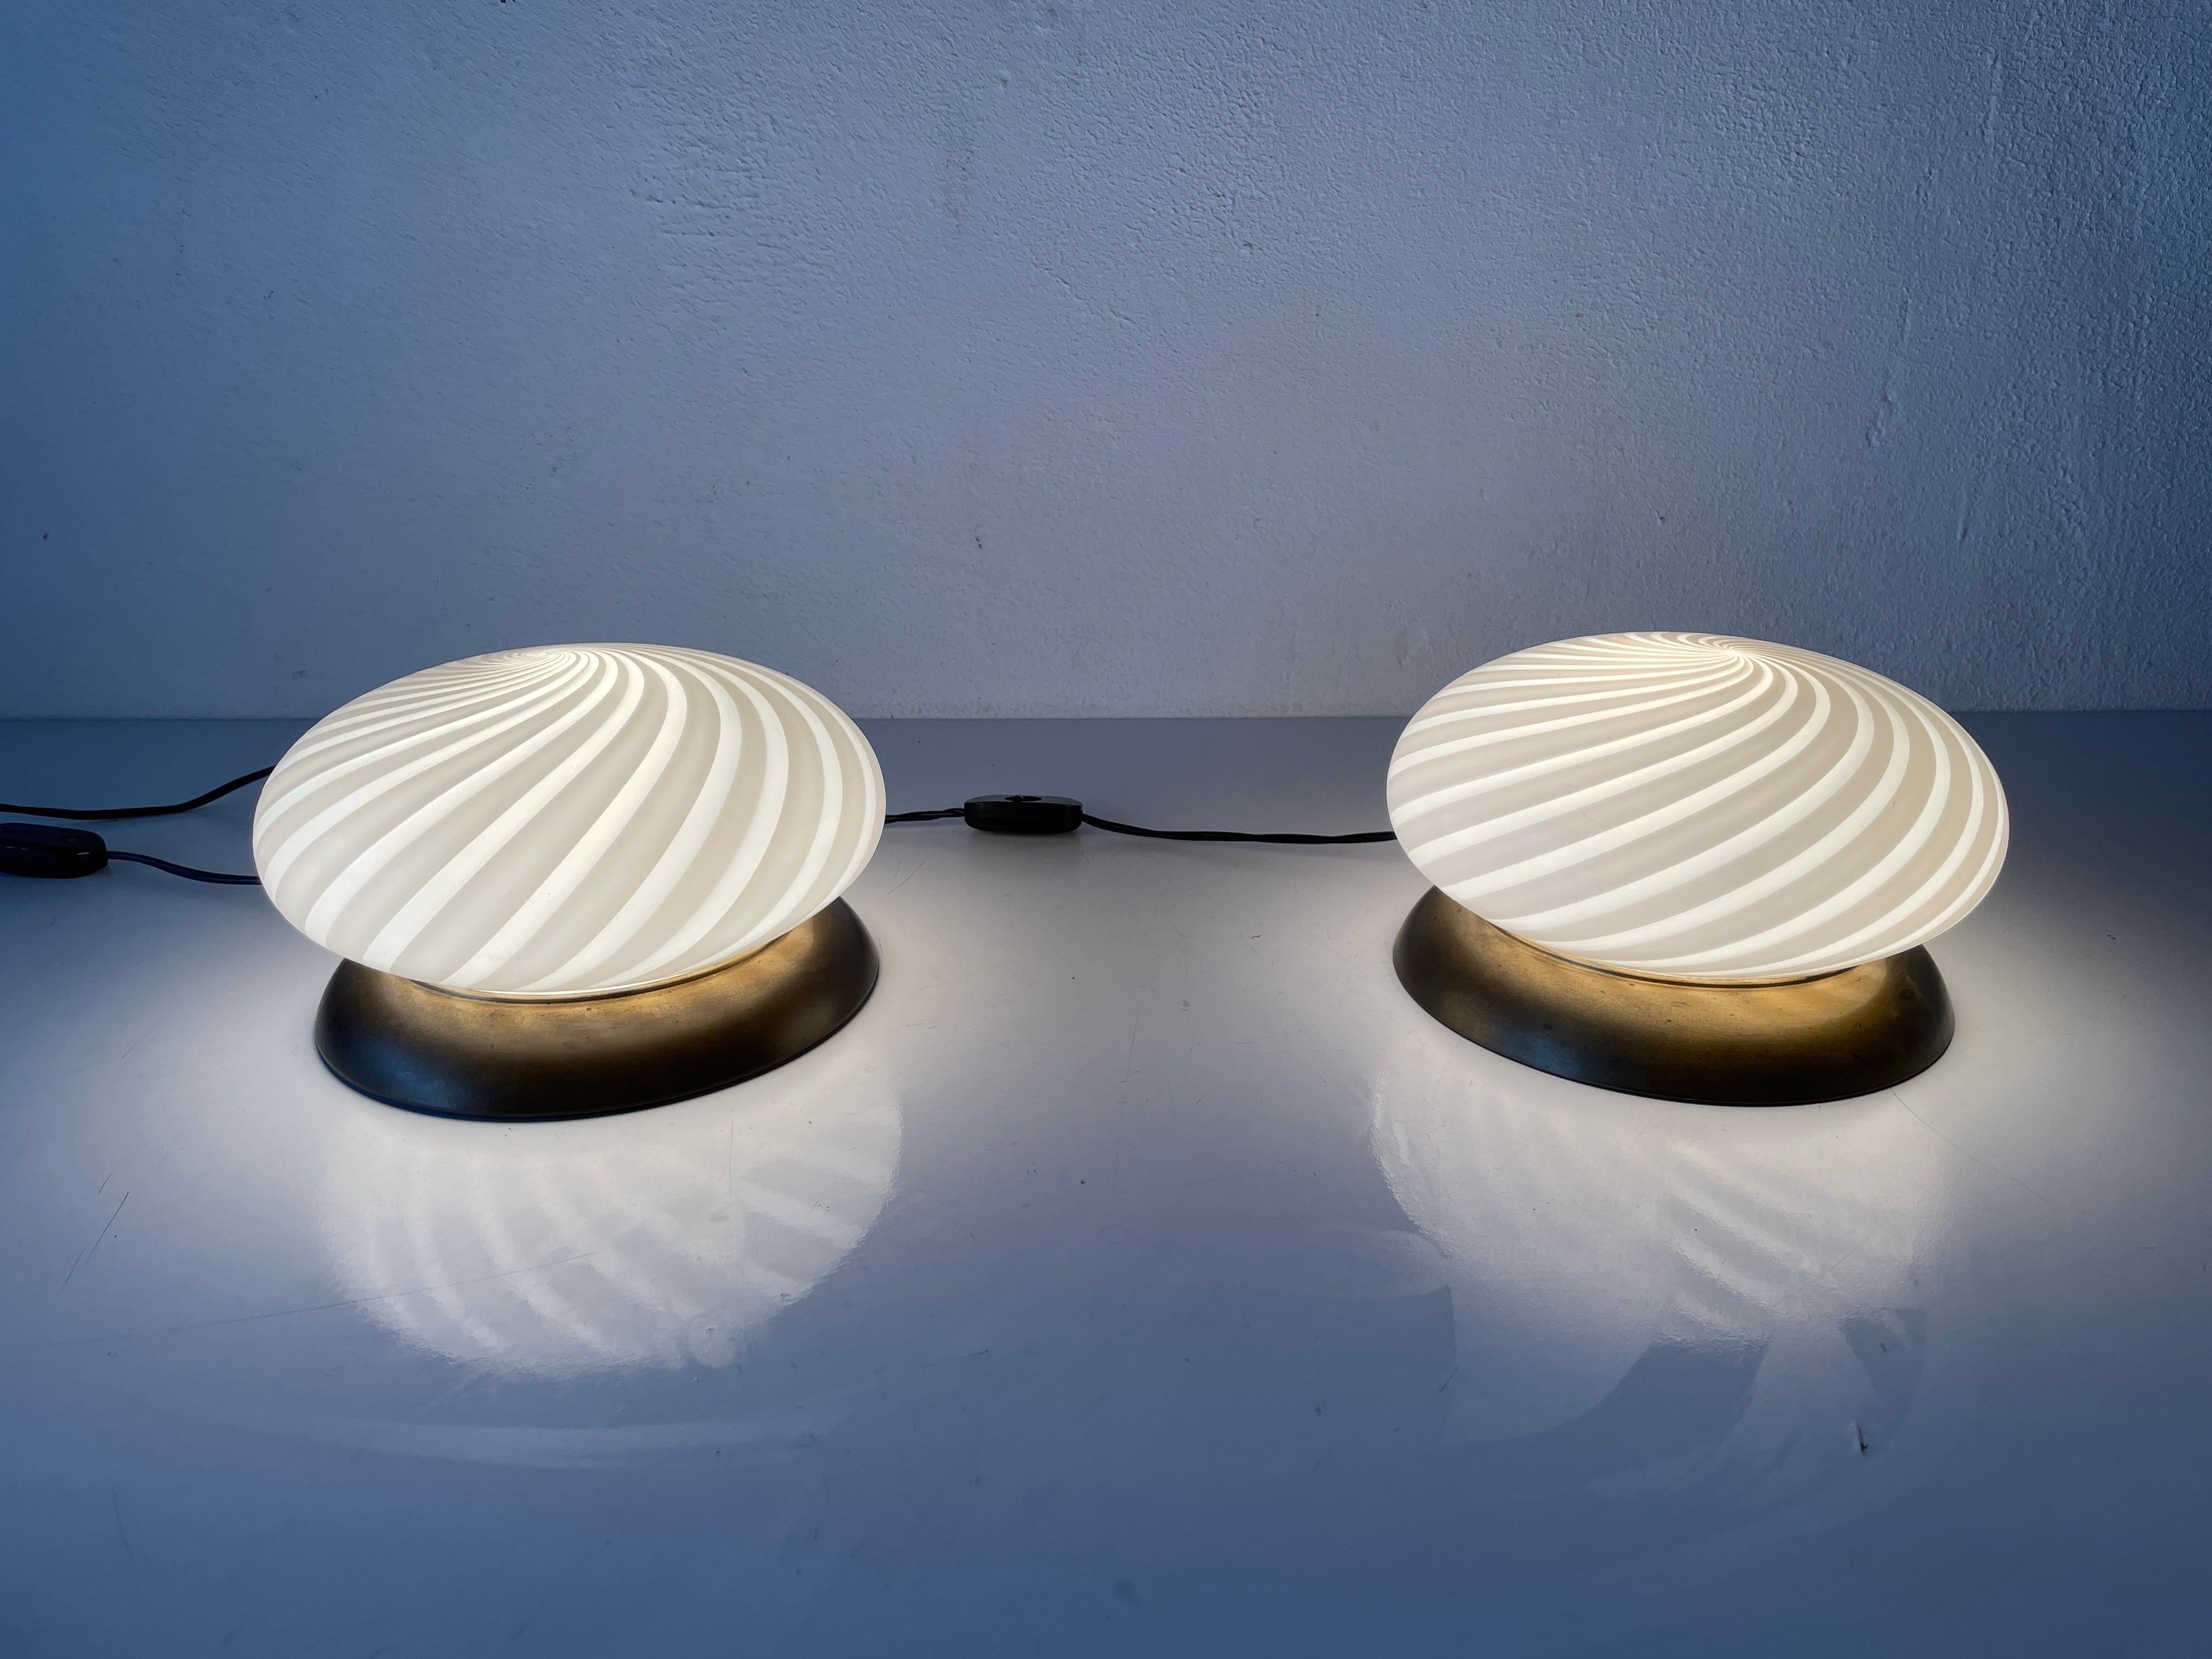 Brass Pair of Table Lamps by Milano-Industria Lampadari Lamter, 1950s, Italy For Sale